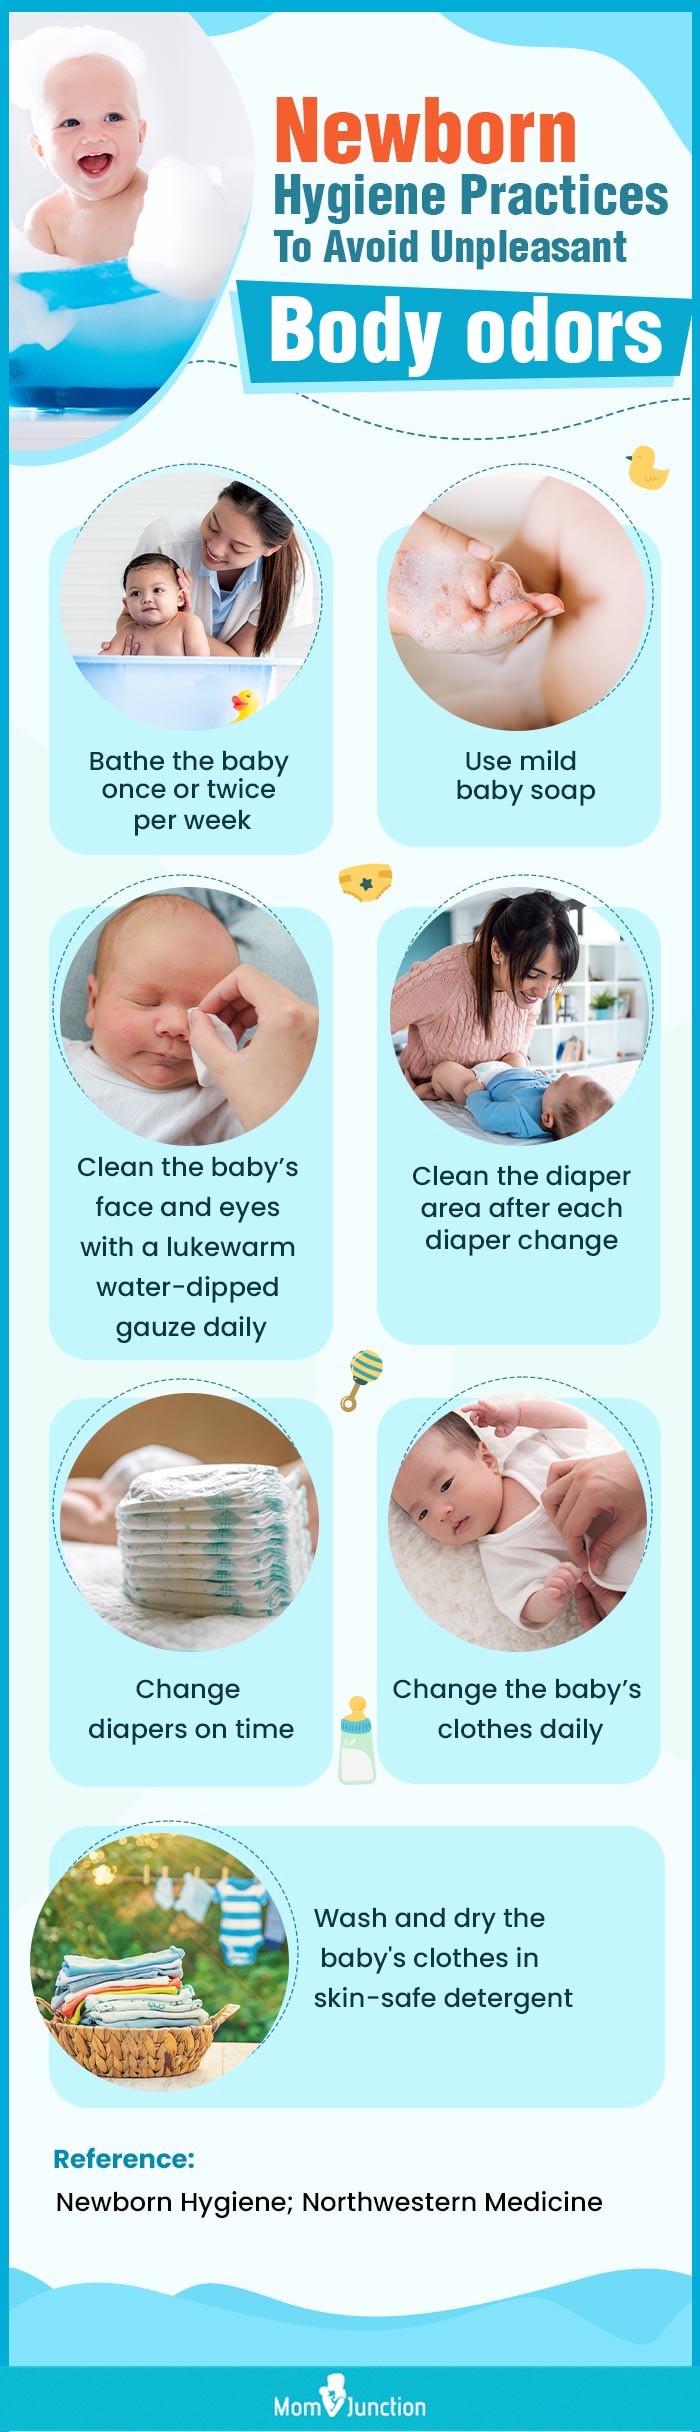 newborn hygiene practices to avoid unpleasant body odors (infographic)